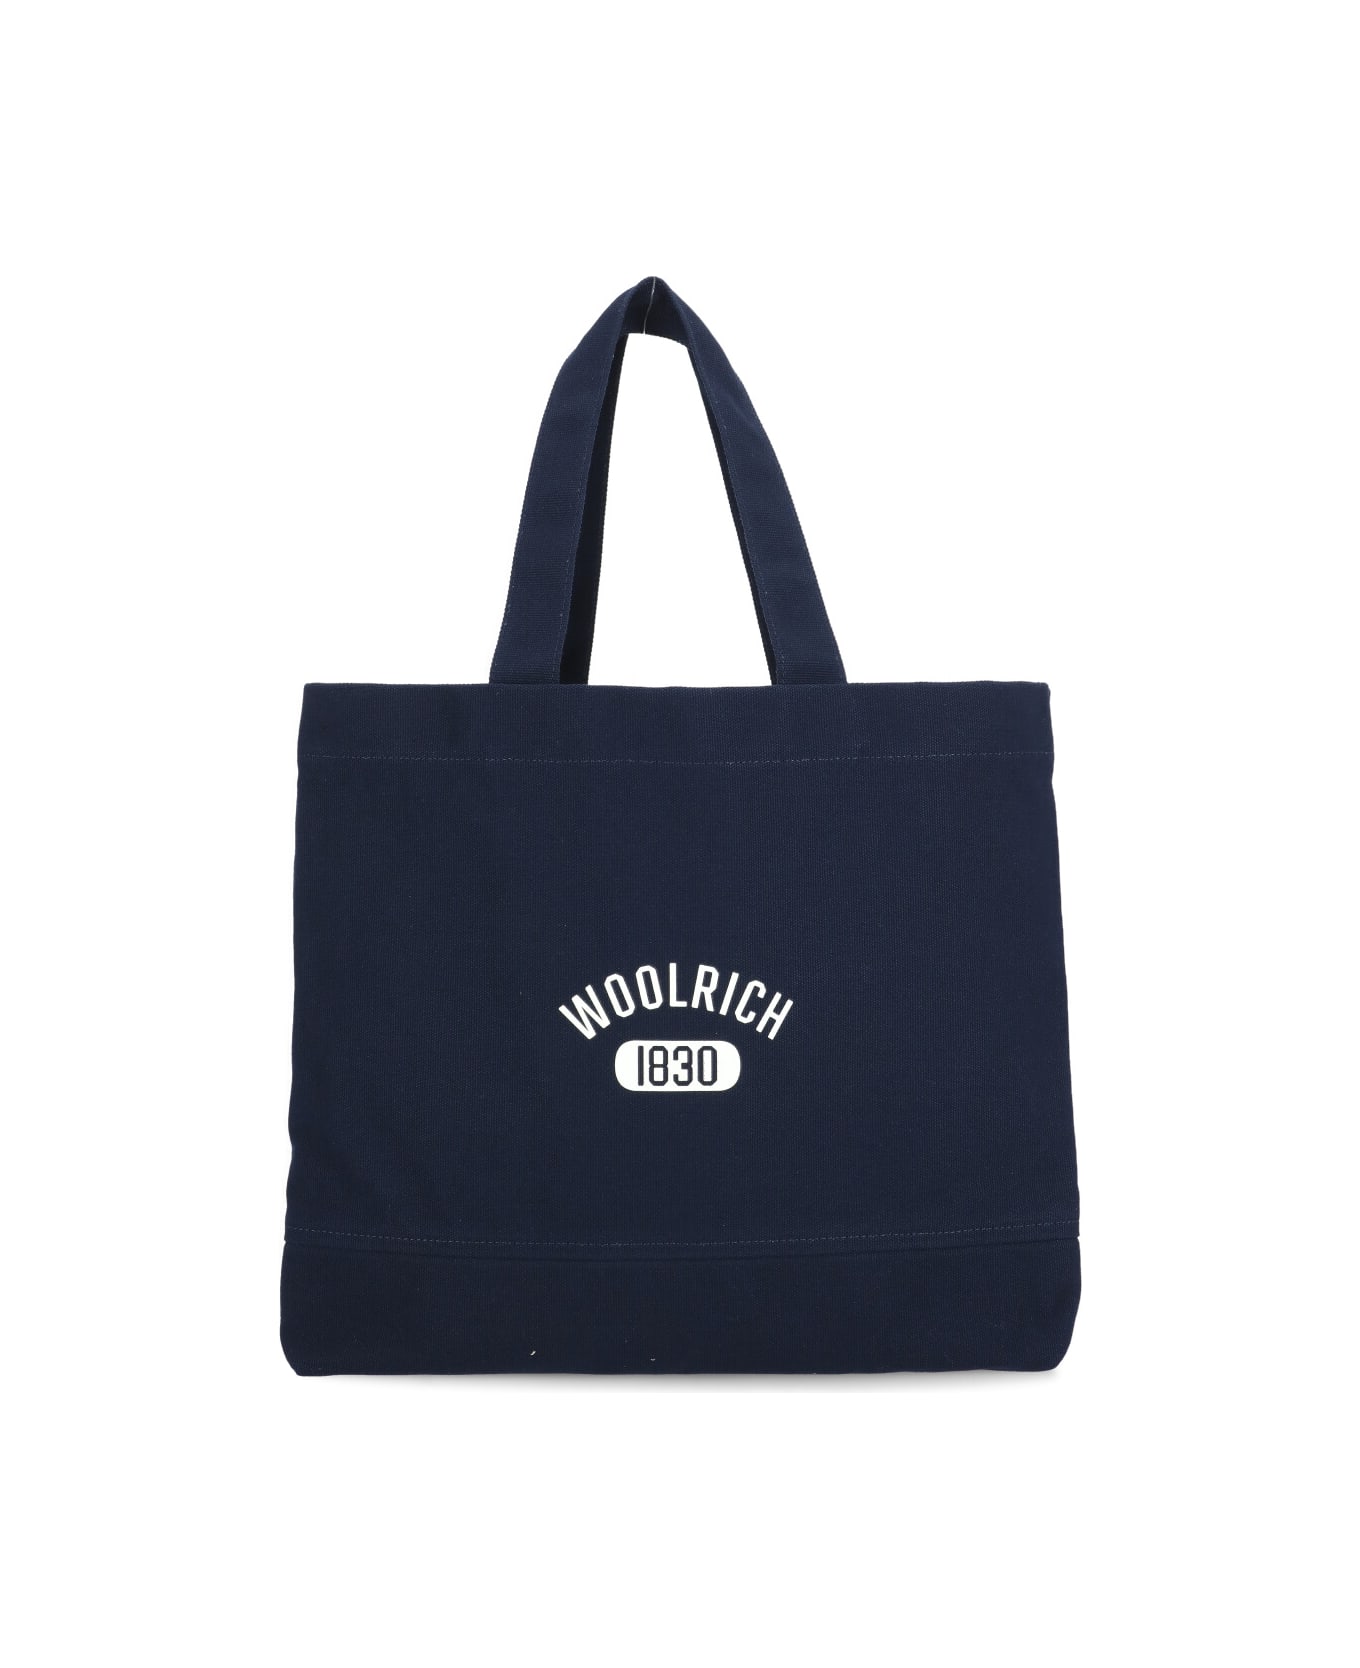 Woolrich Shopper Tote Bag - Blue